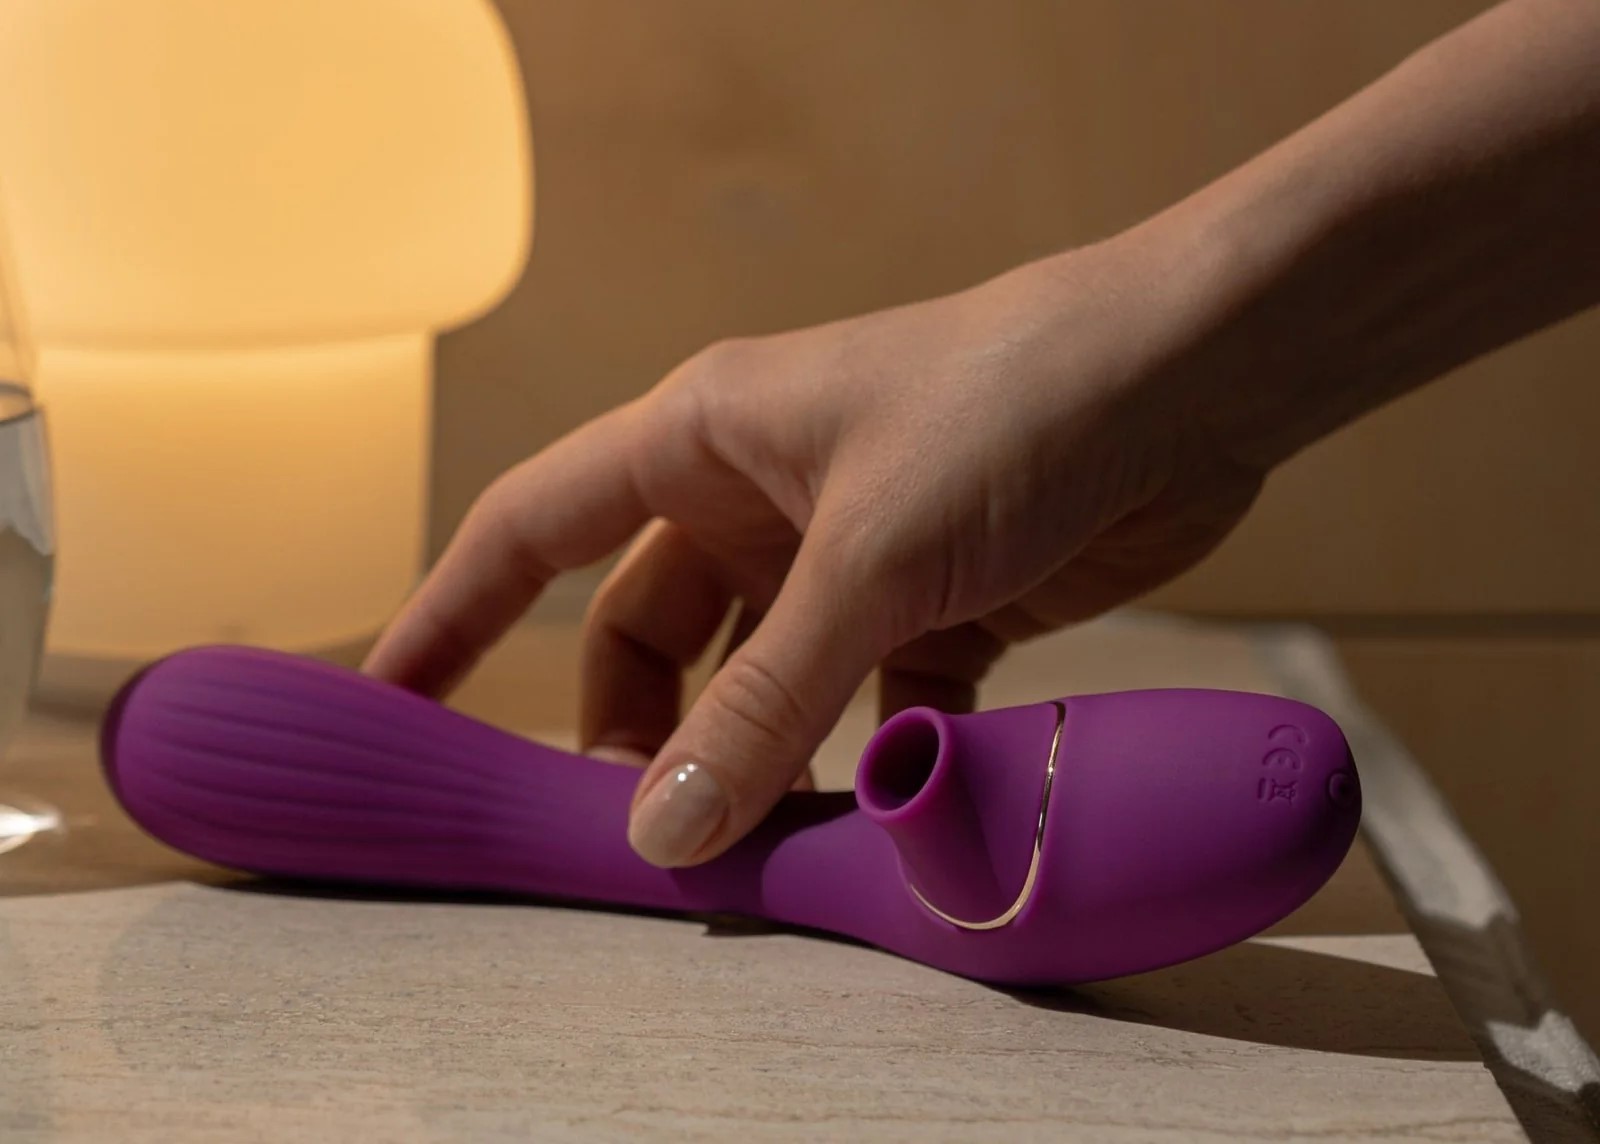 The Aura clit-sucking vibrator in purple.